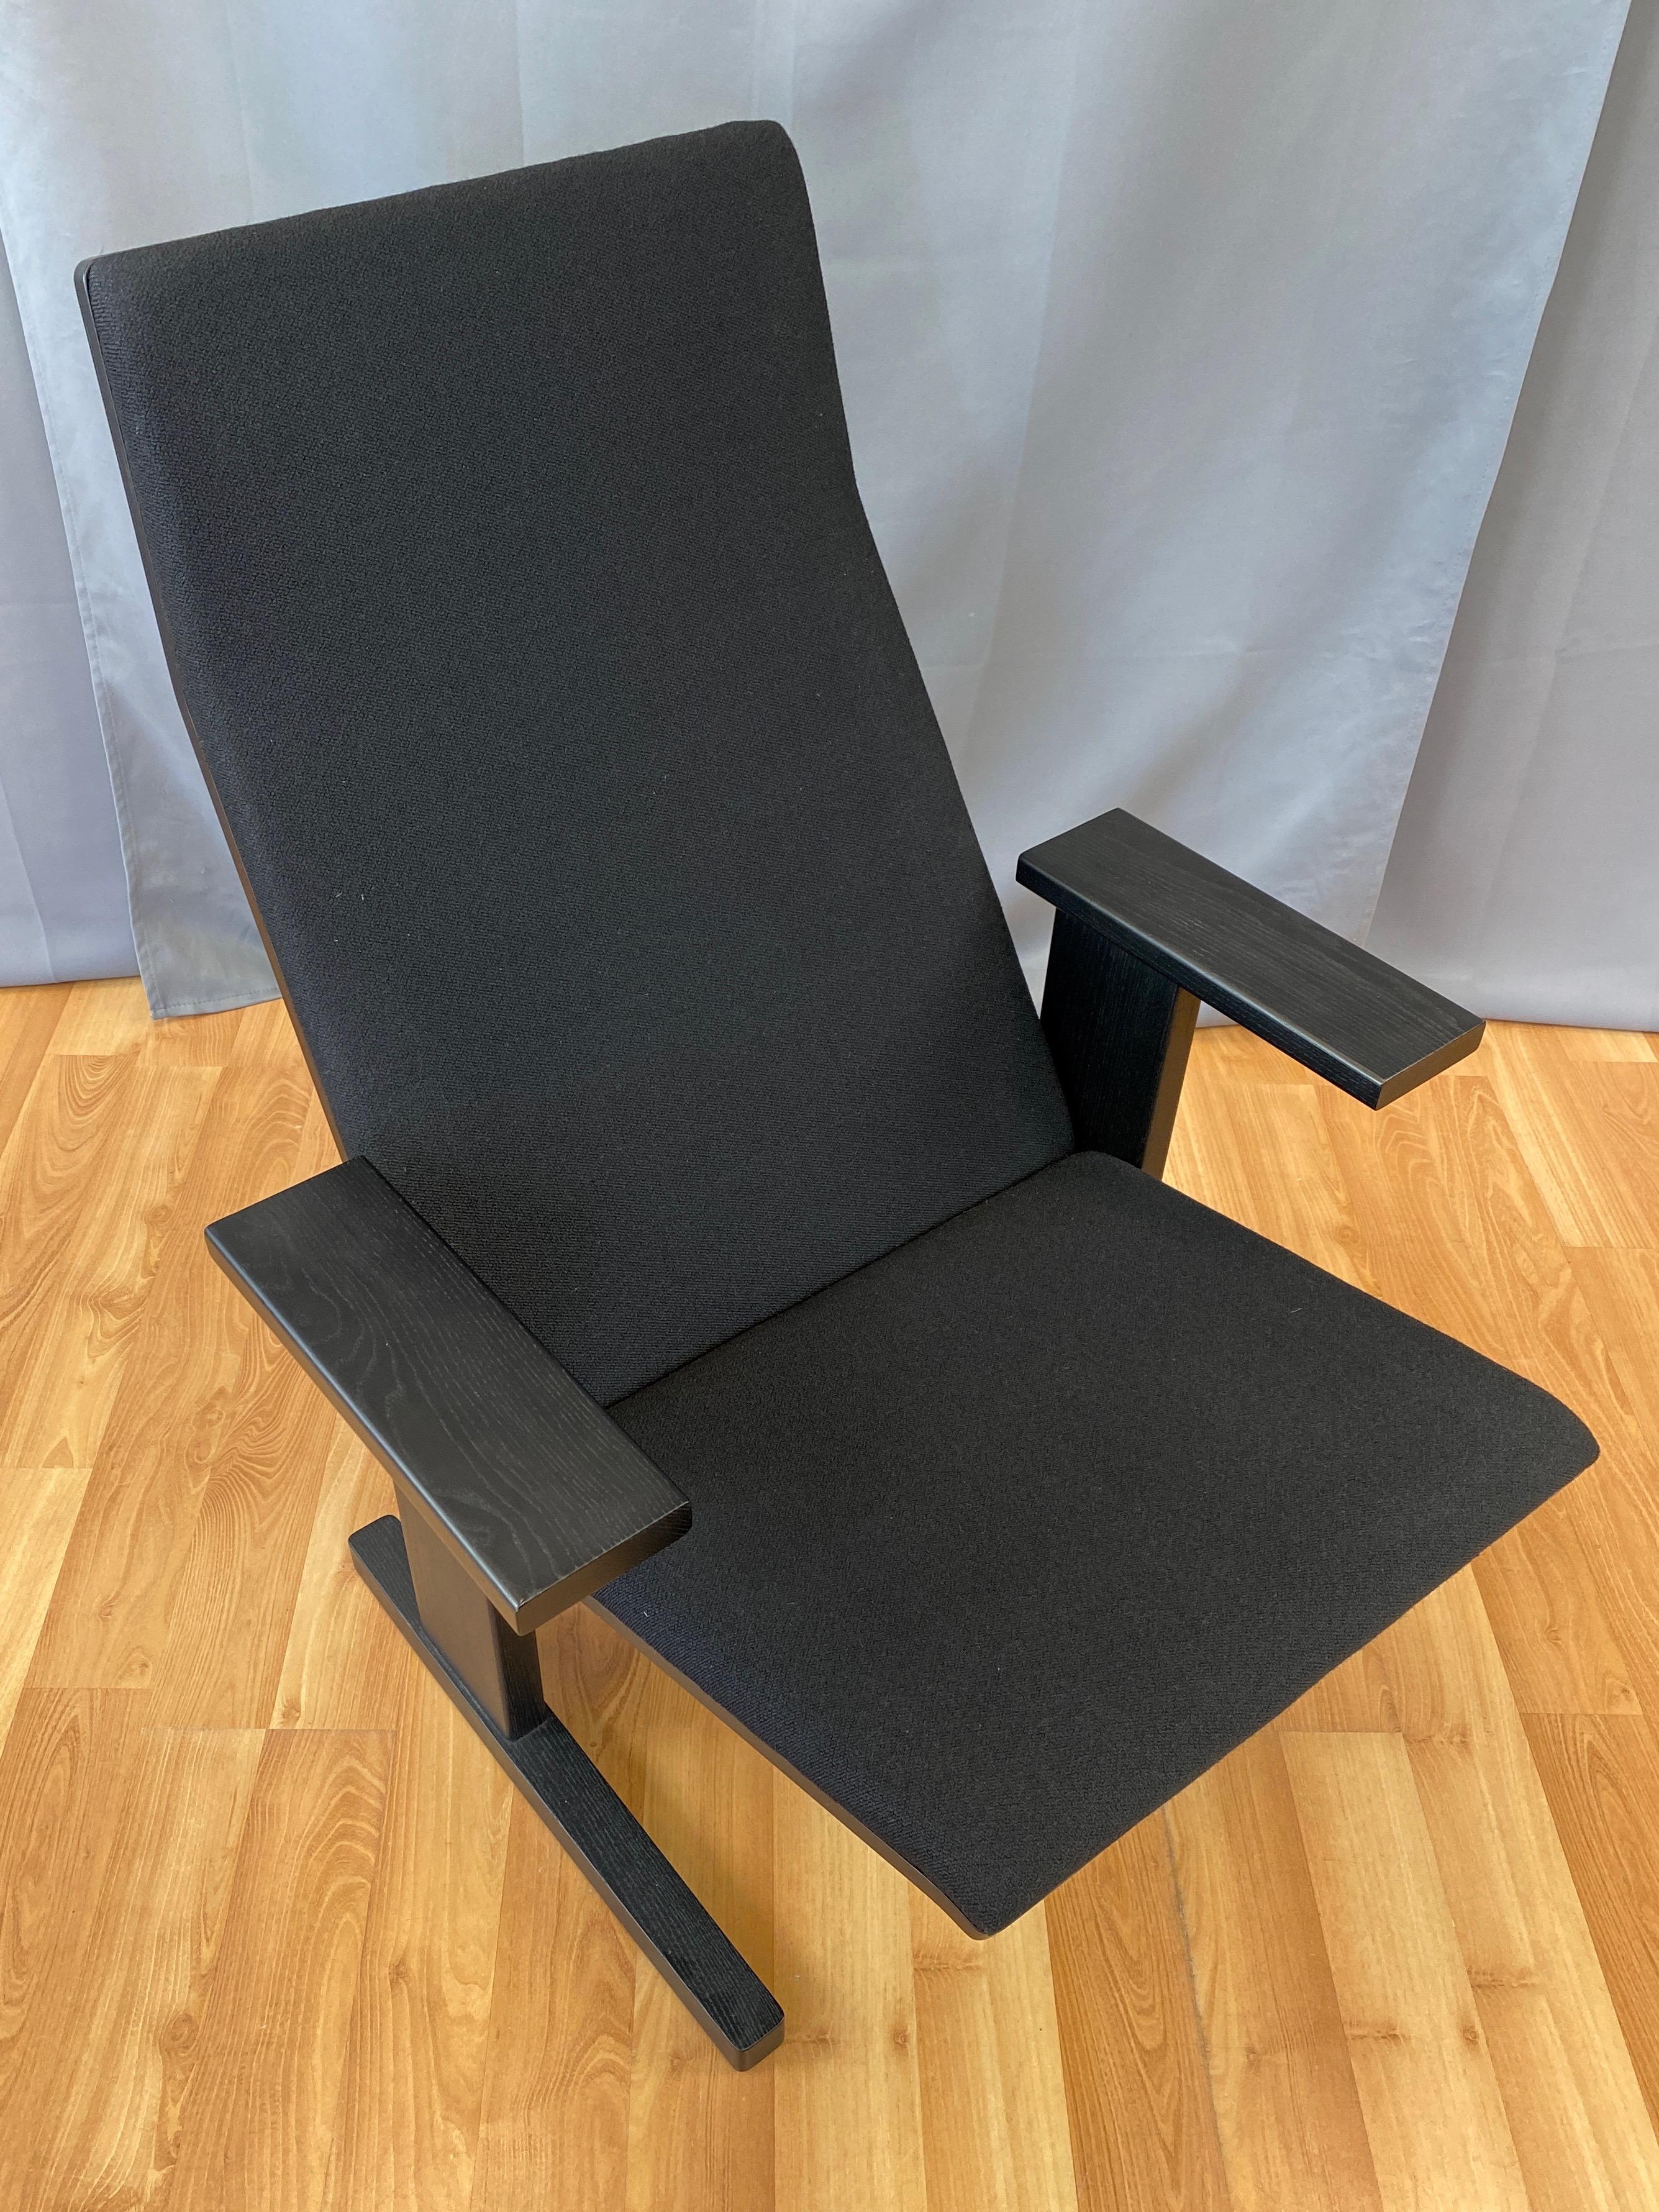 Ronan & Erwan Bouroullec for Mattiazzi Black Quindici Lounge Chair, 2018 For Sale 1